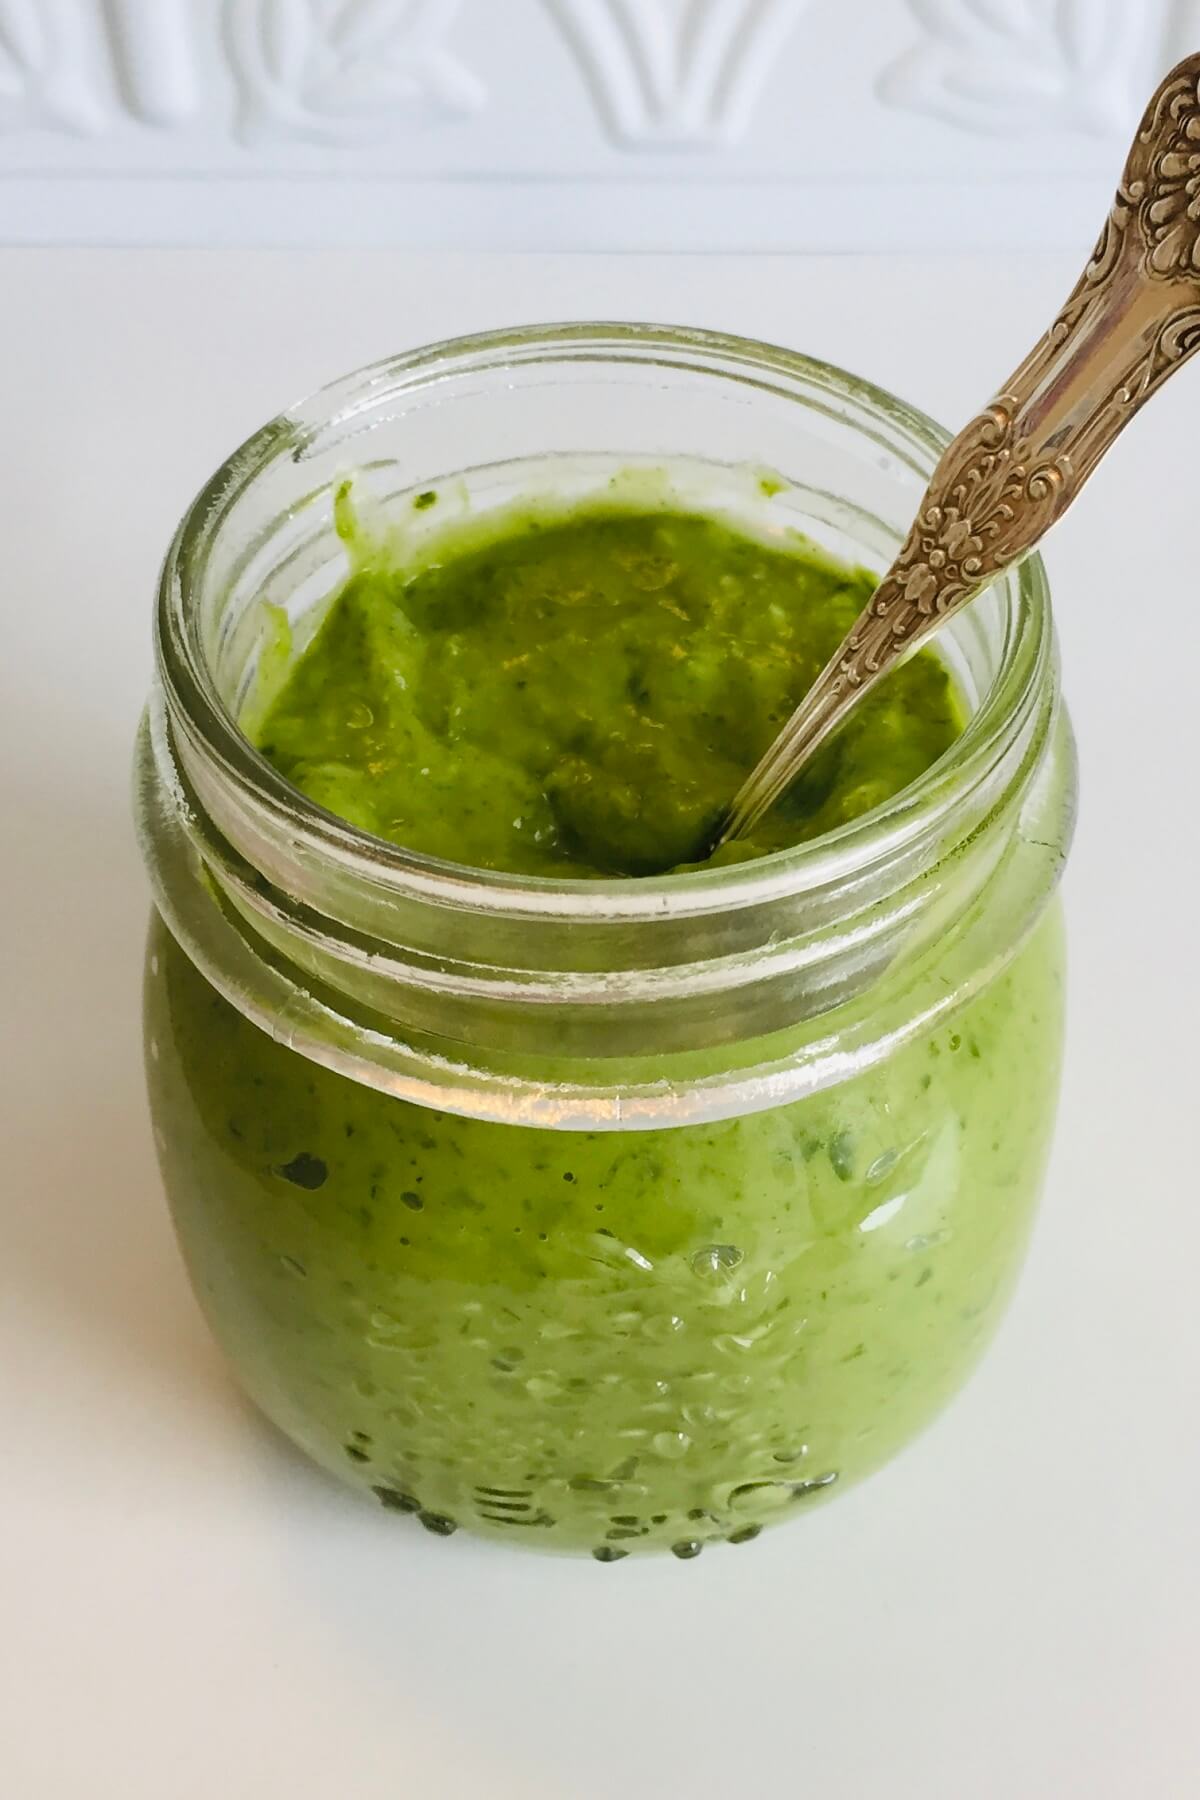 Green salad dressing in a glass jar.